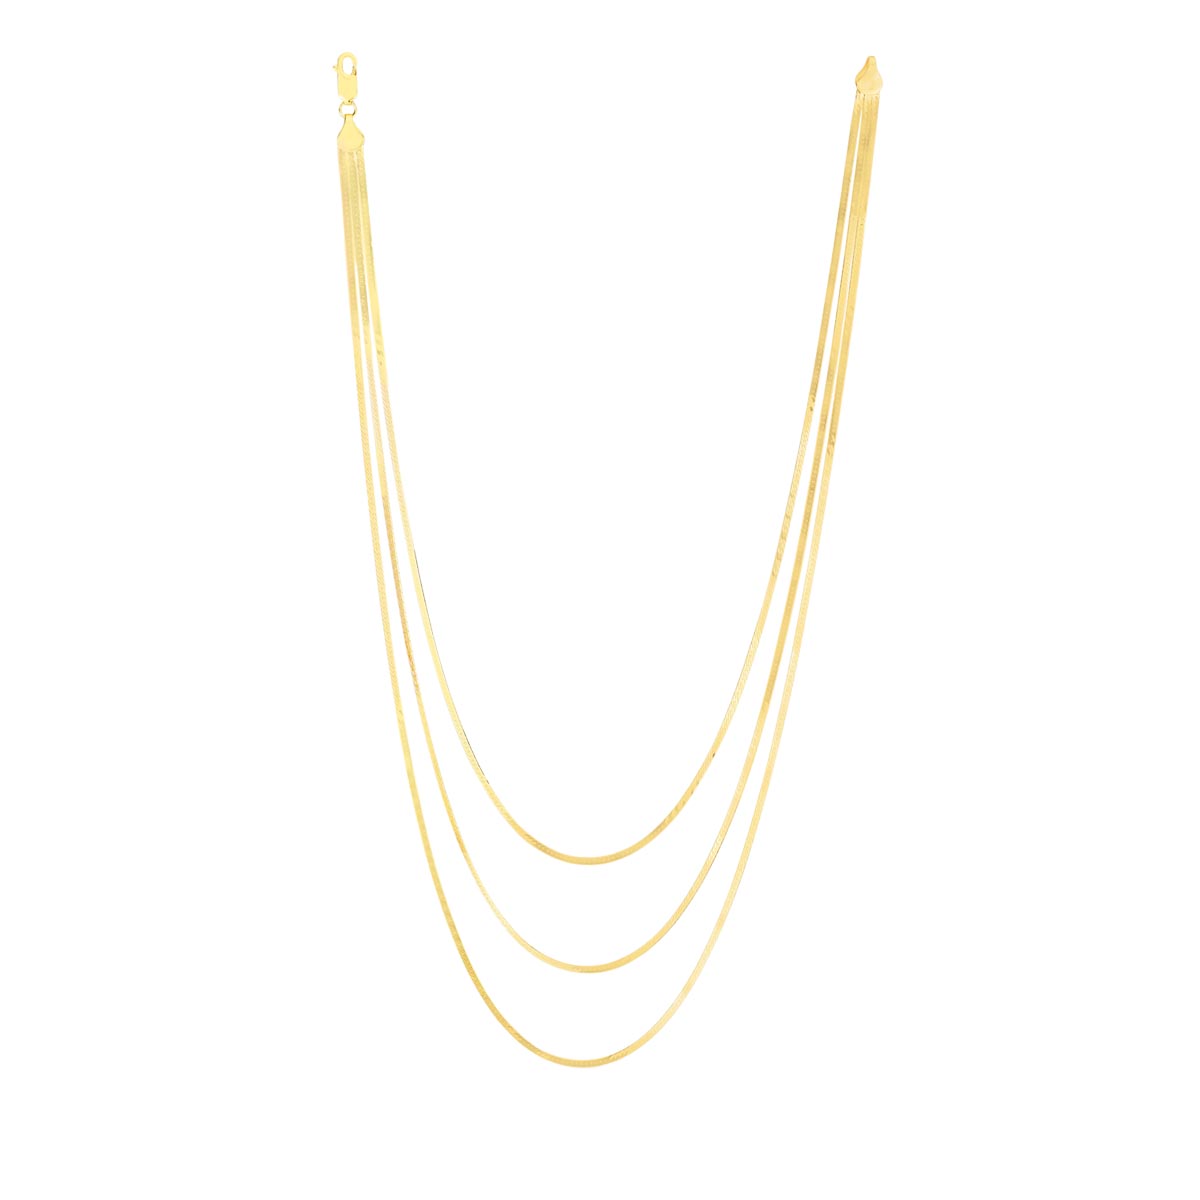 Multi Strand Herringbone Necklace in 14kt Yellow Gold